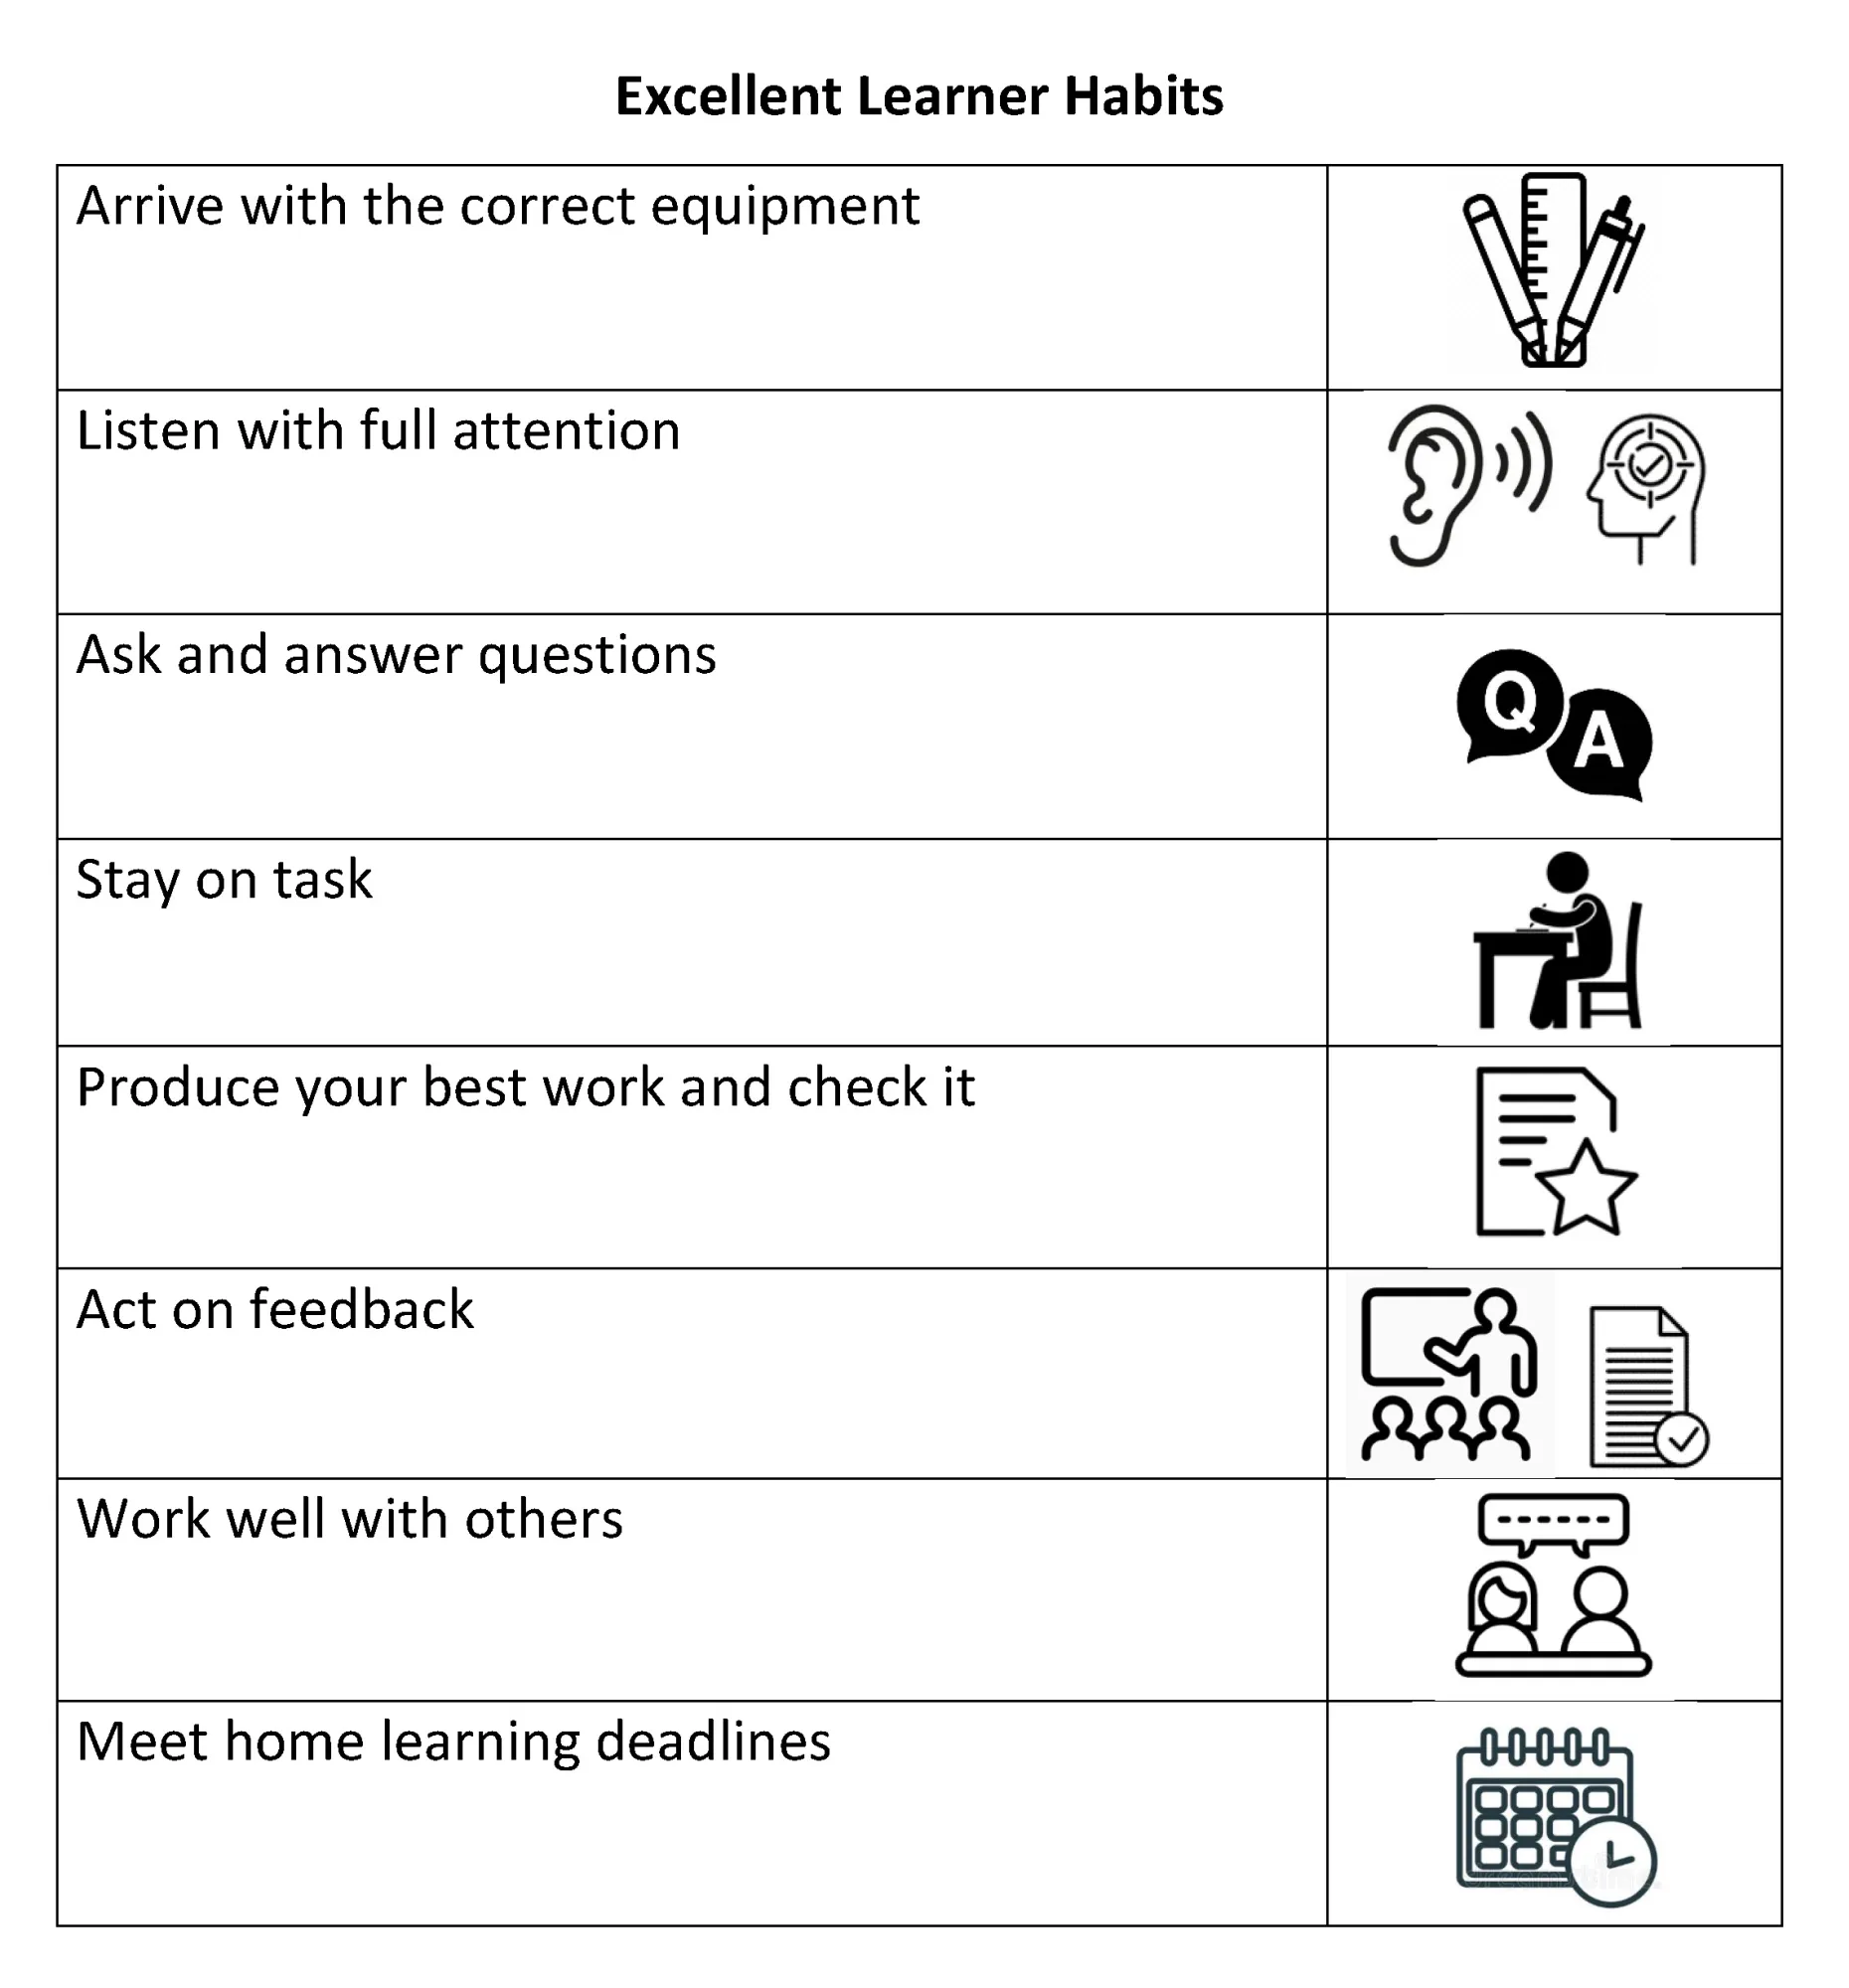 Excellent-Learner-Habits-768x802